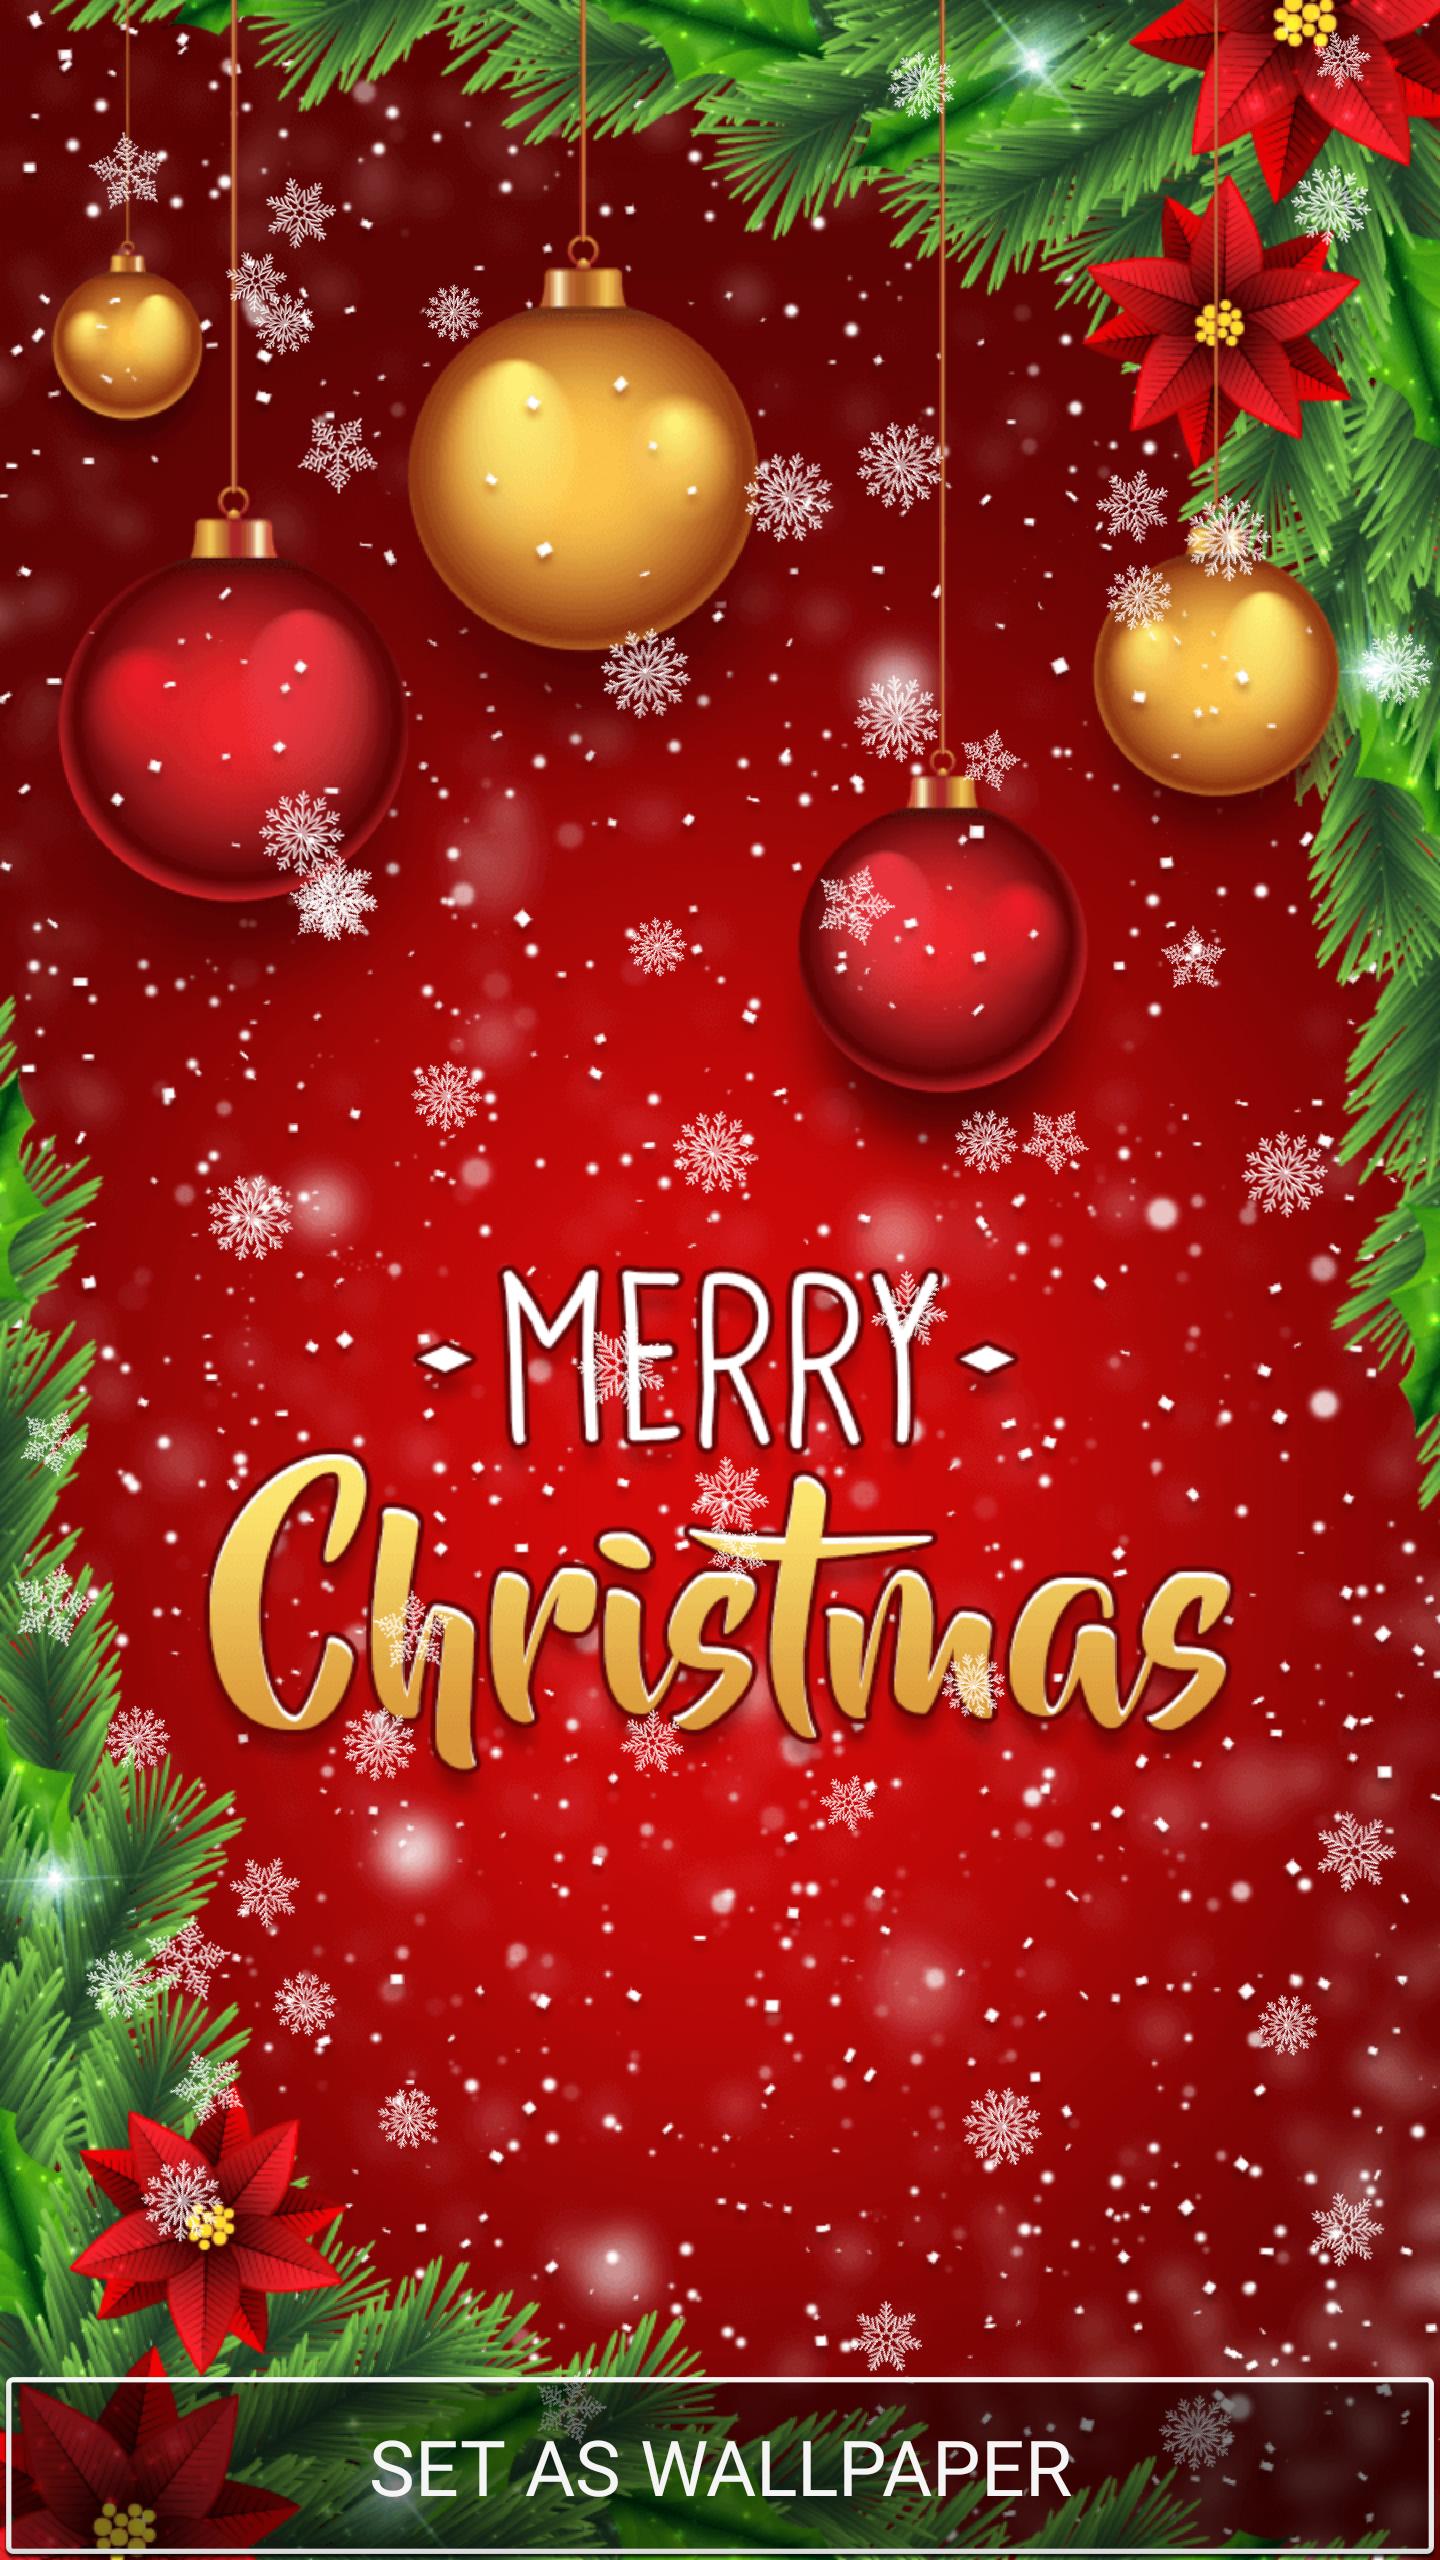 Sfondi Gratis Natalizi.Sfondi Animati Natale Gratis For Android Apk Download